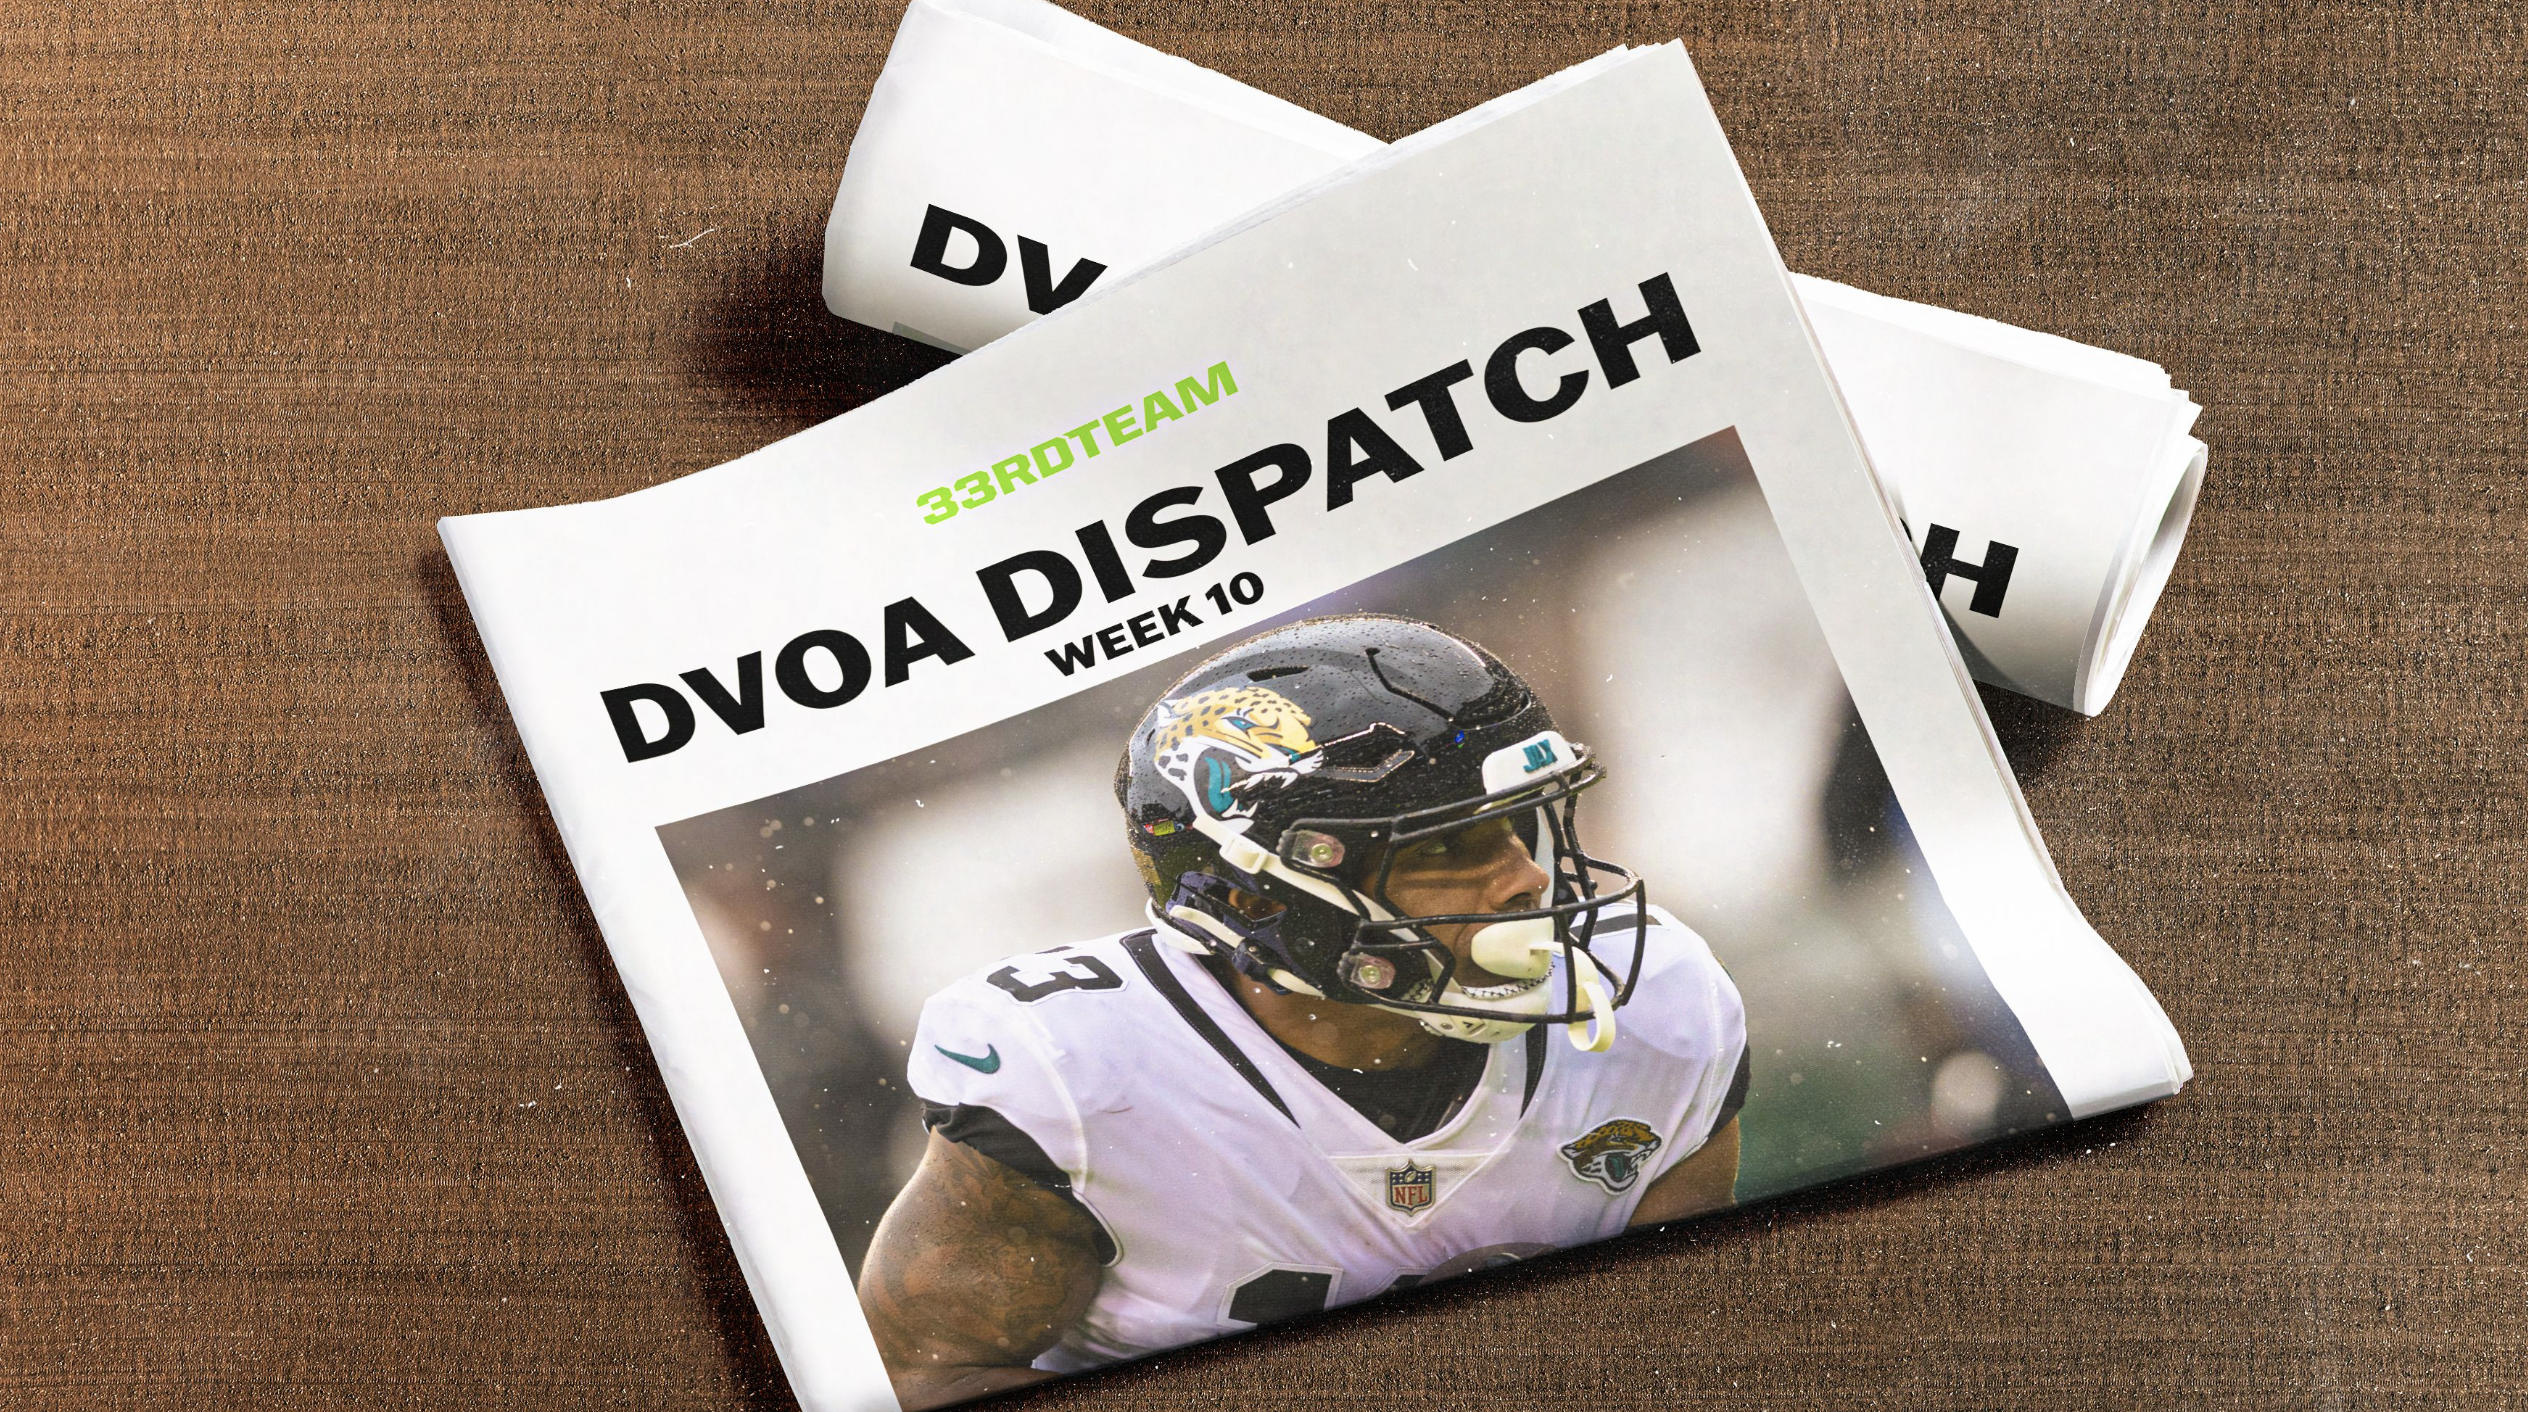 DVOA Dispatch: DFS Targets for NFL Week 10